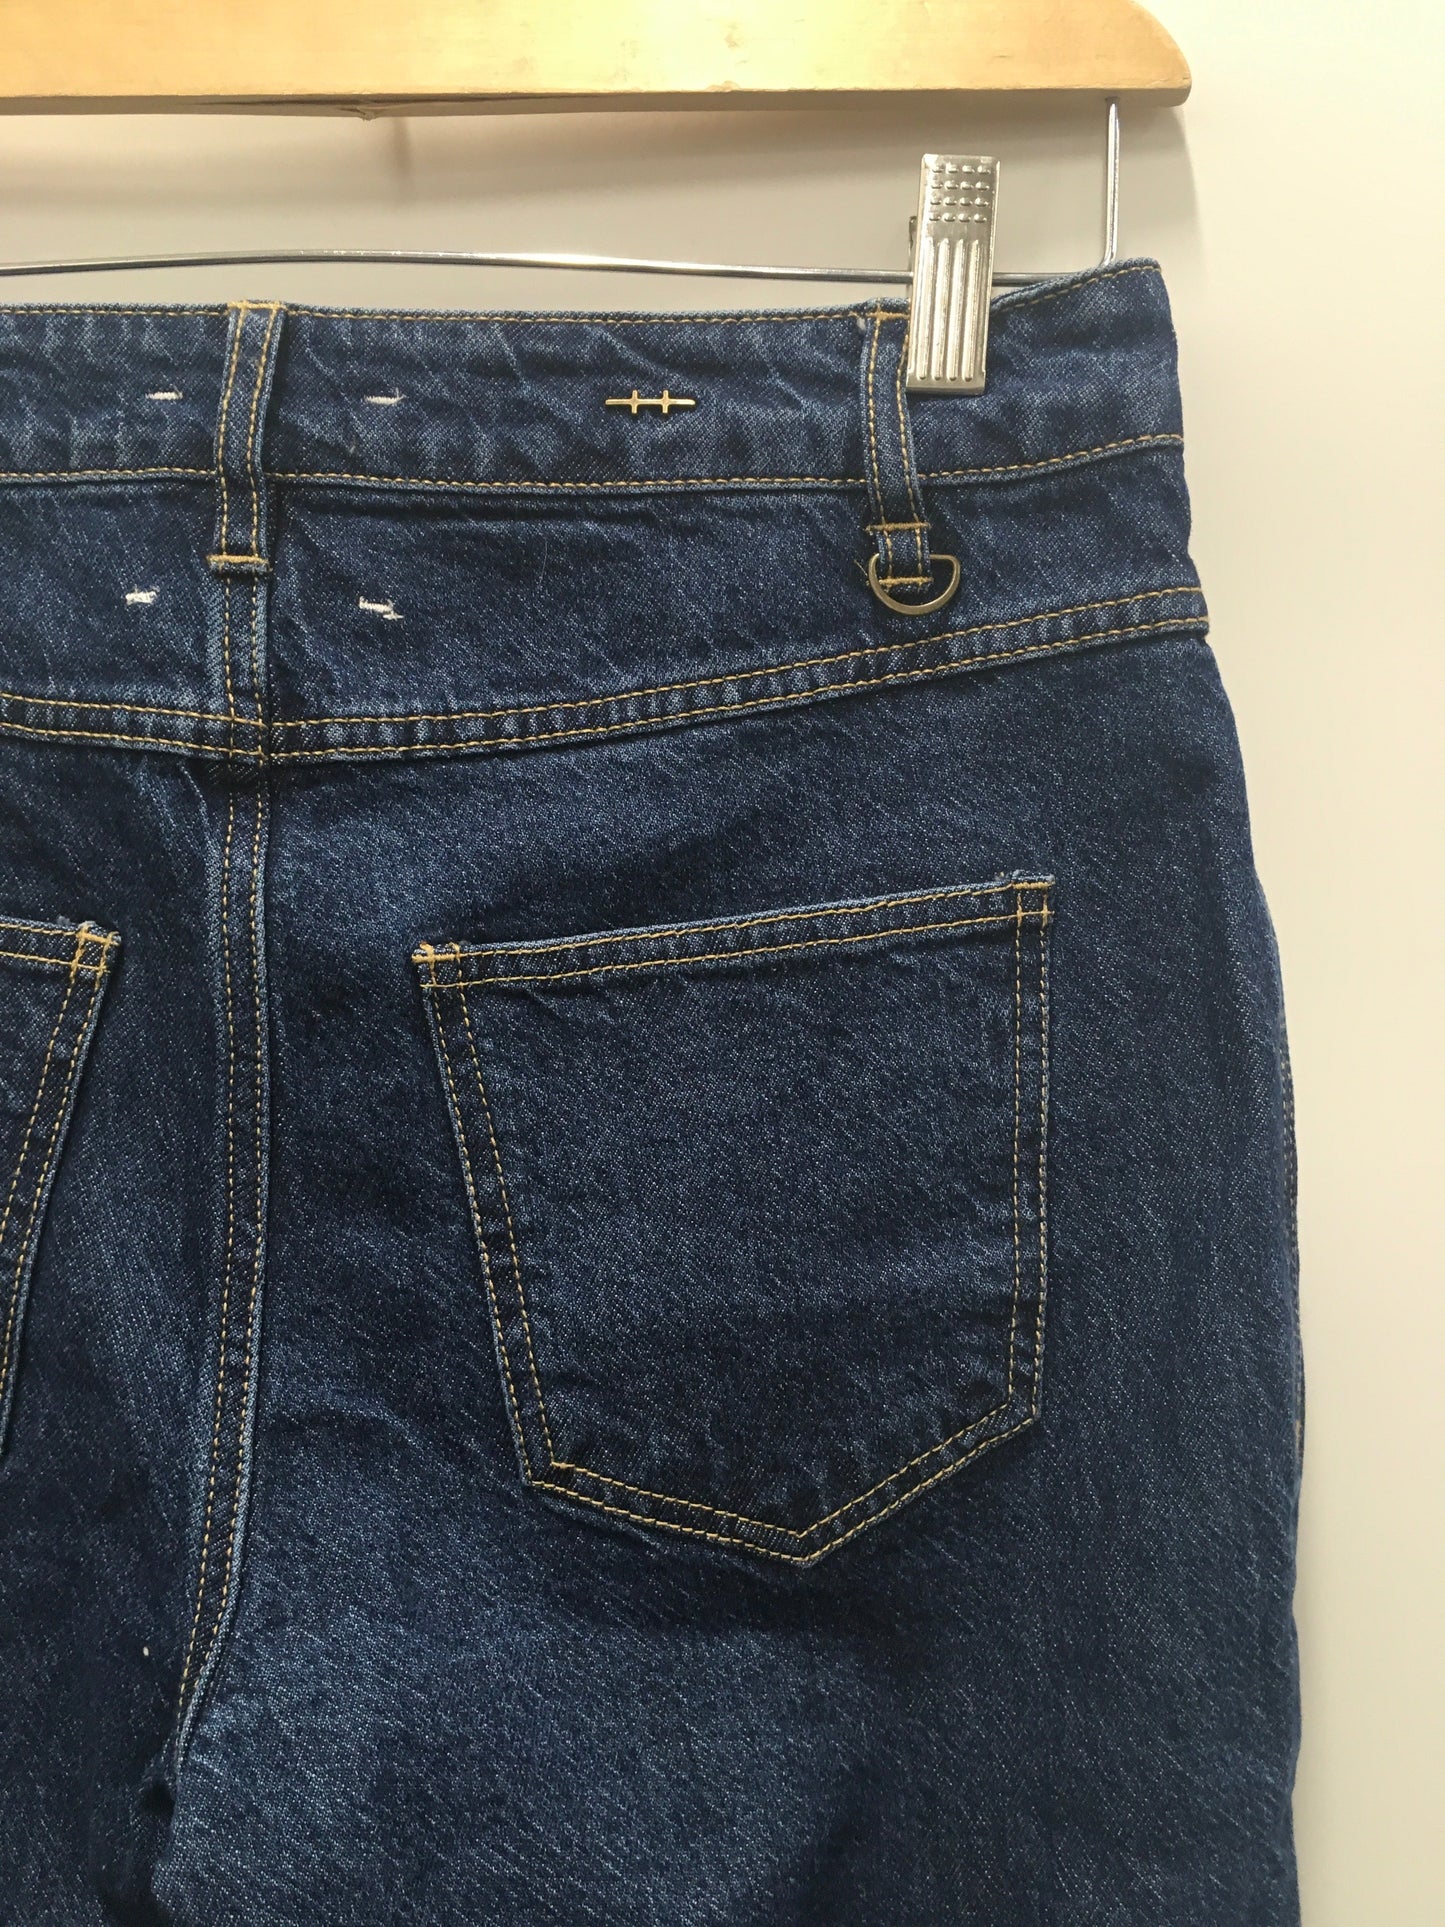 Blue Denim Jeans Flared Habitual, Size 2